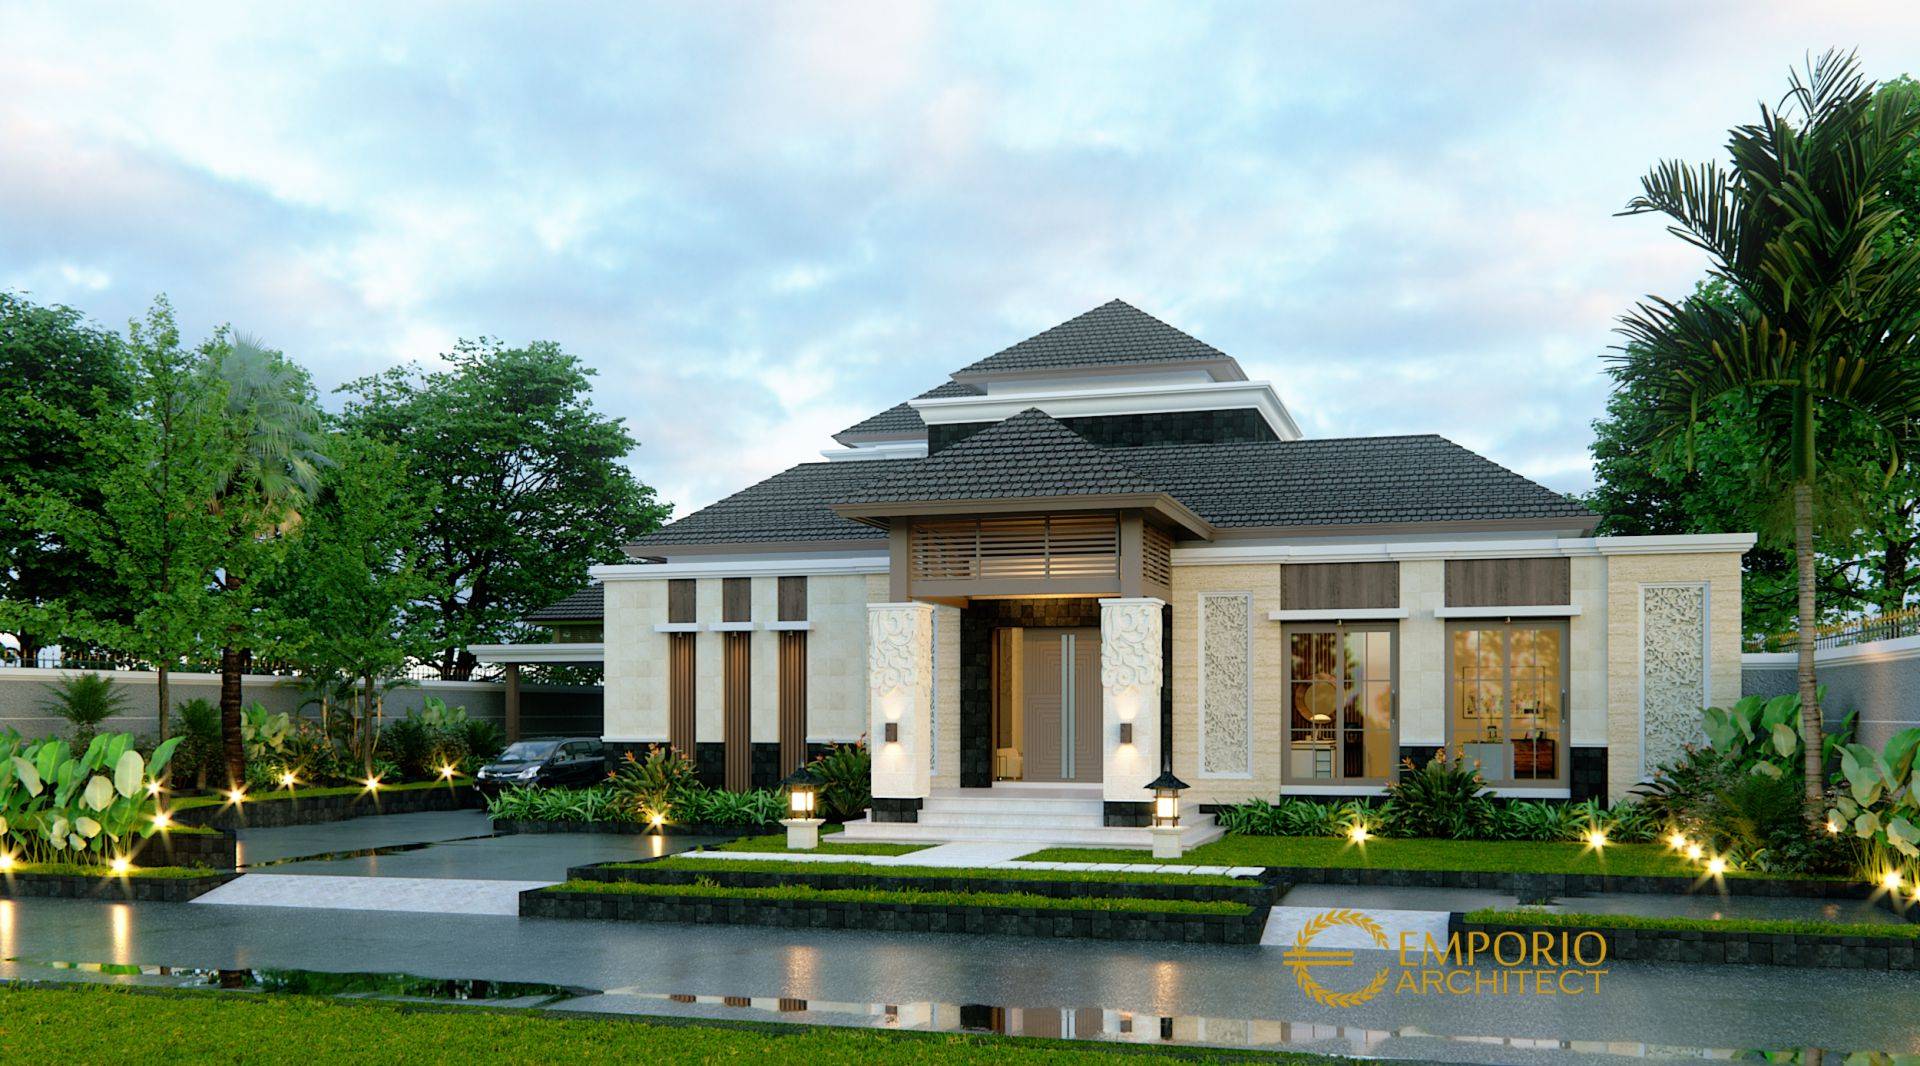  Desain  Rumah  Villa  Bali 2  Lantai  Bapak Chandra di Jakarta